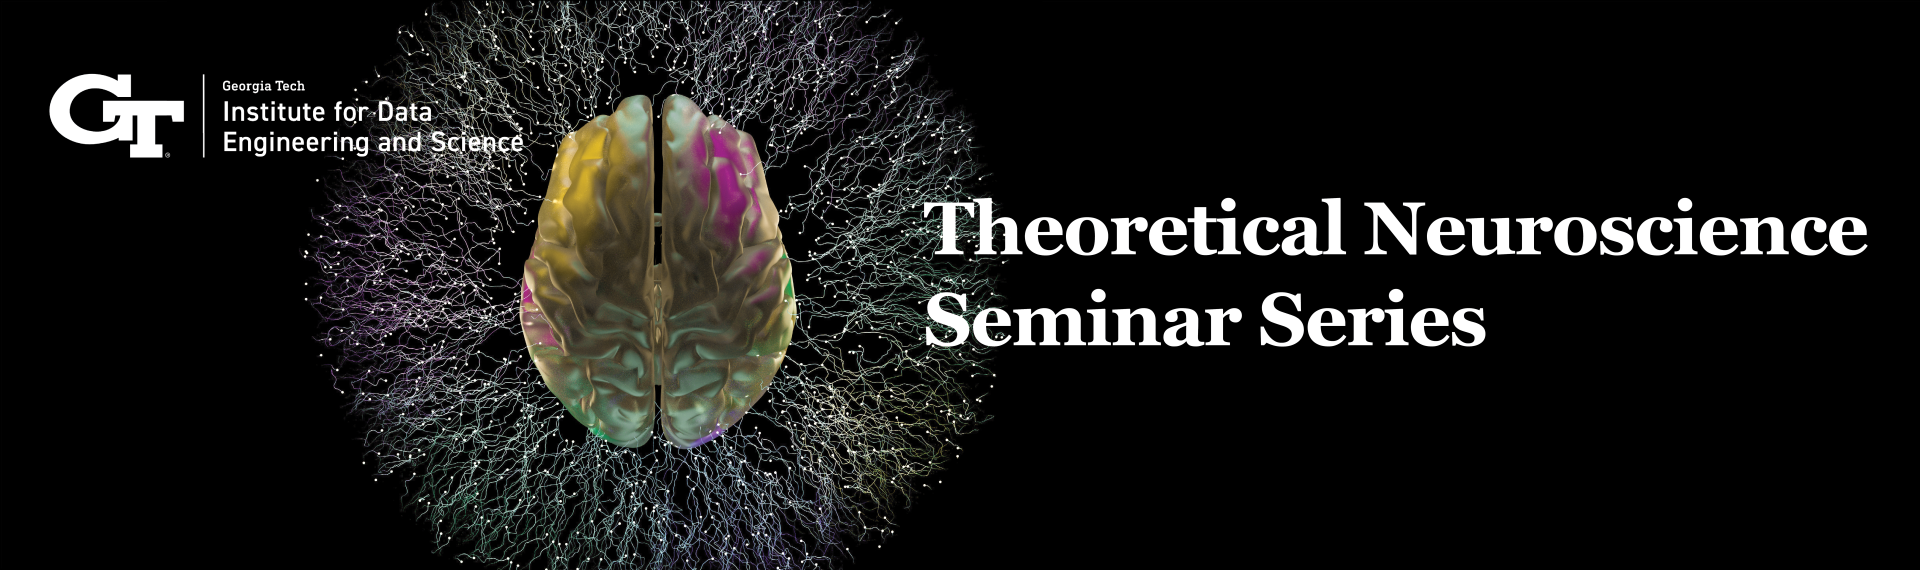 Theoretical Neuroscience Seminar Series representative banner image